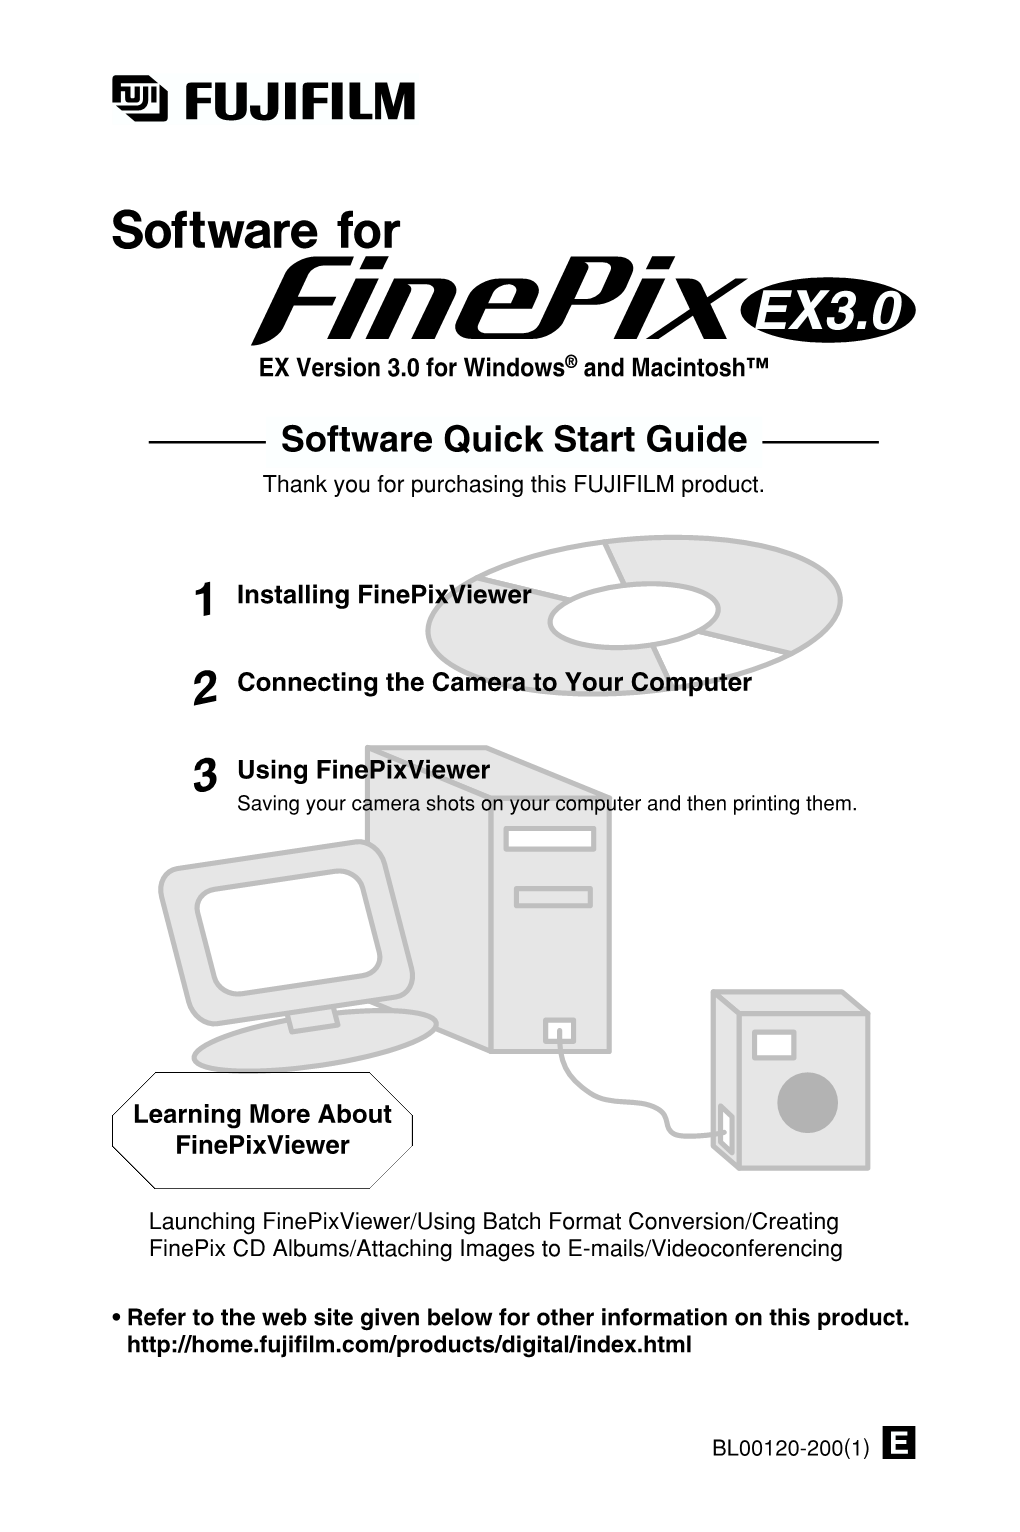 Software for Finepix EX3.0